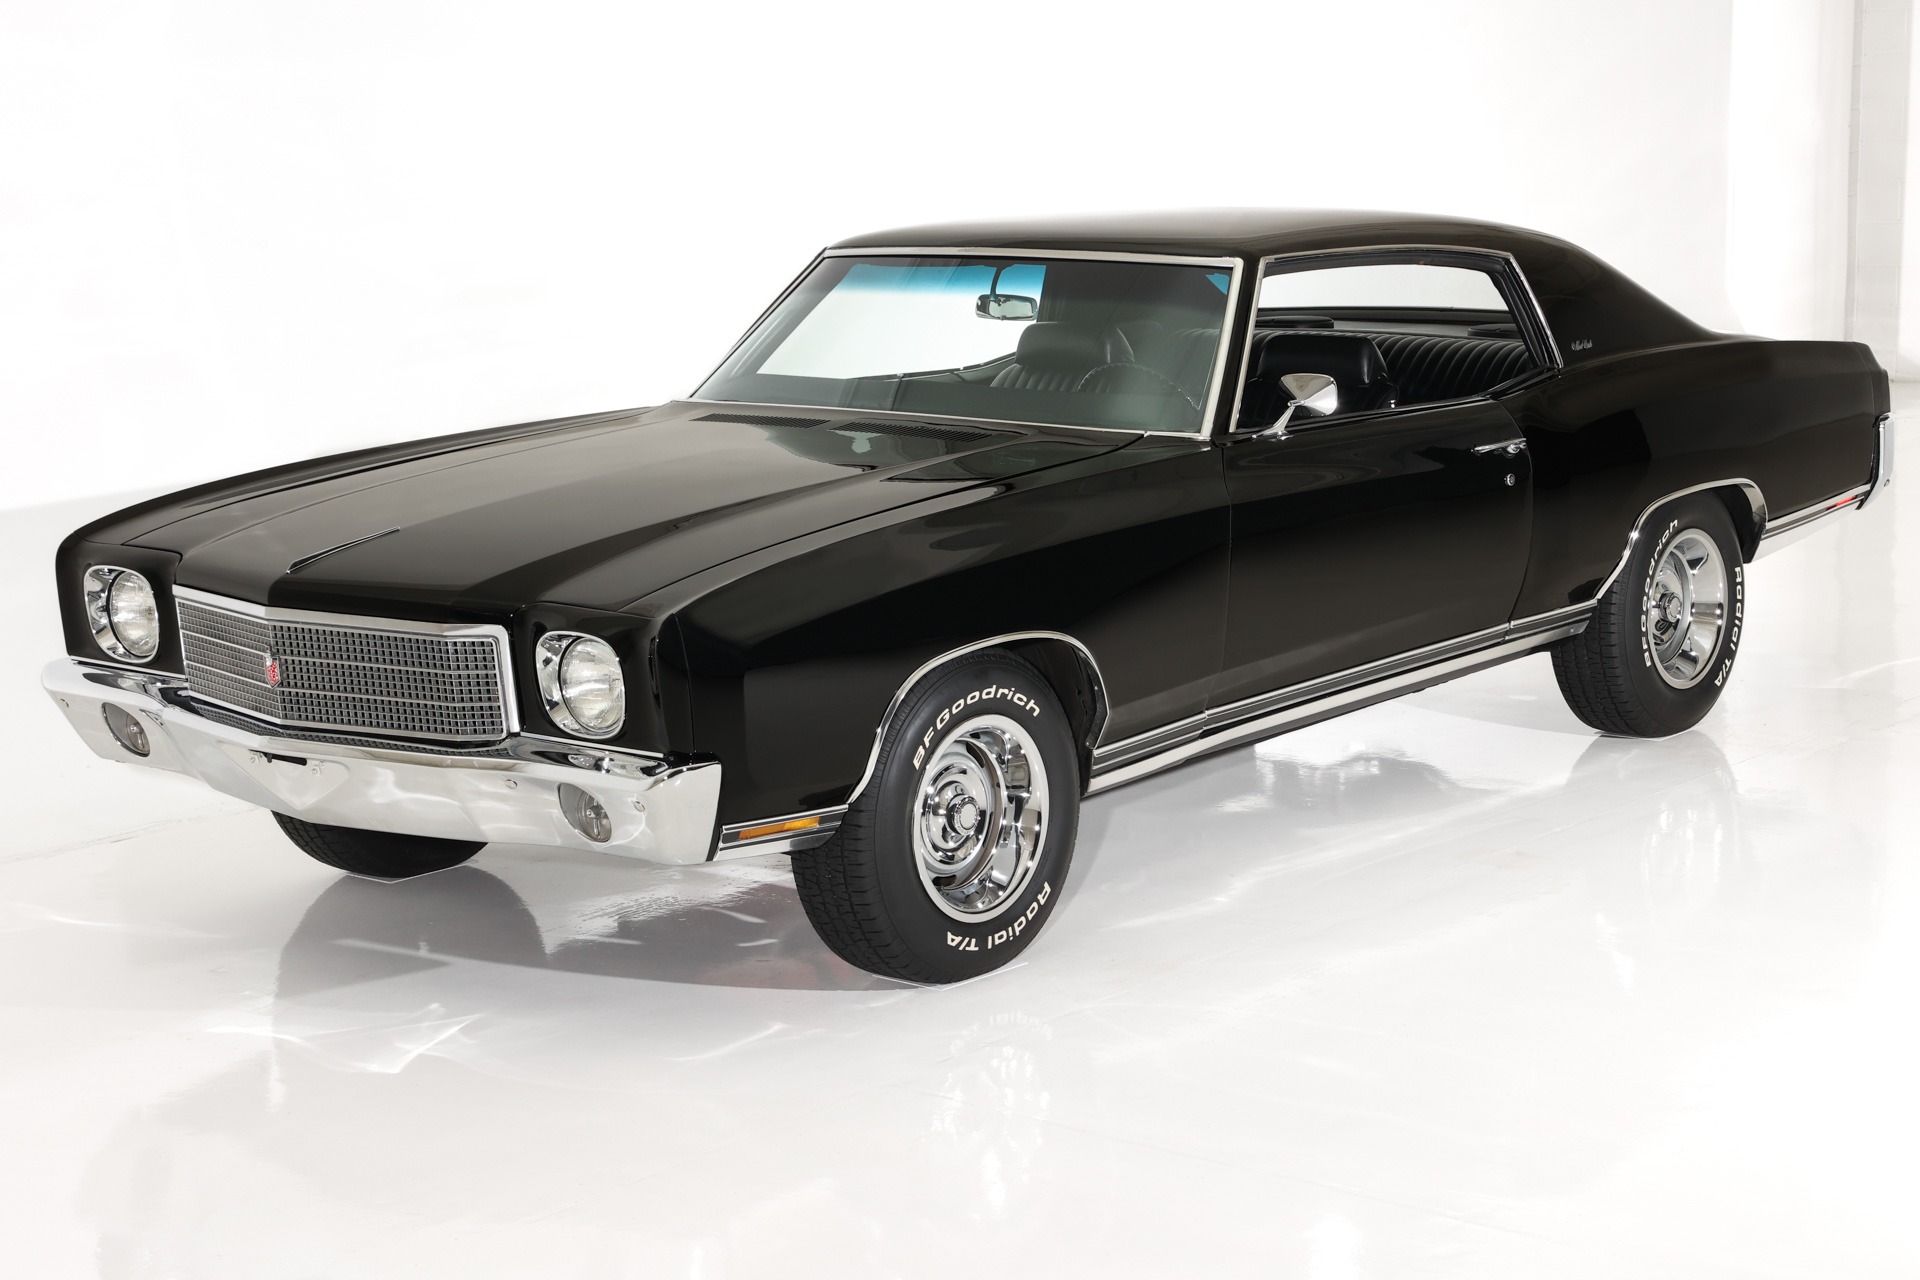 For Sale Used 1970 Chevrolet Monte Carlo Rare 402, 4-Spd #s Match | American Dream Machines Des Moines IA 50309